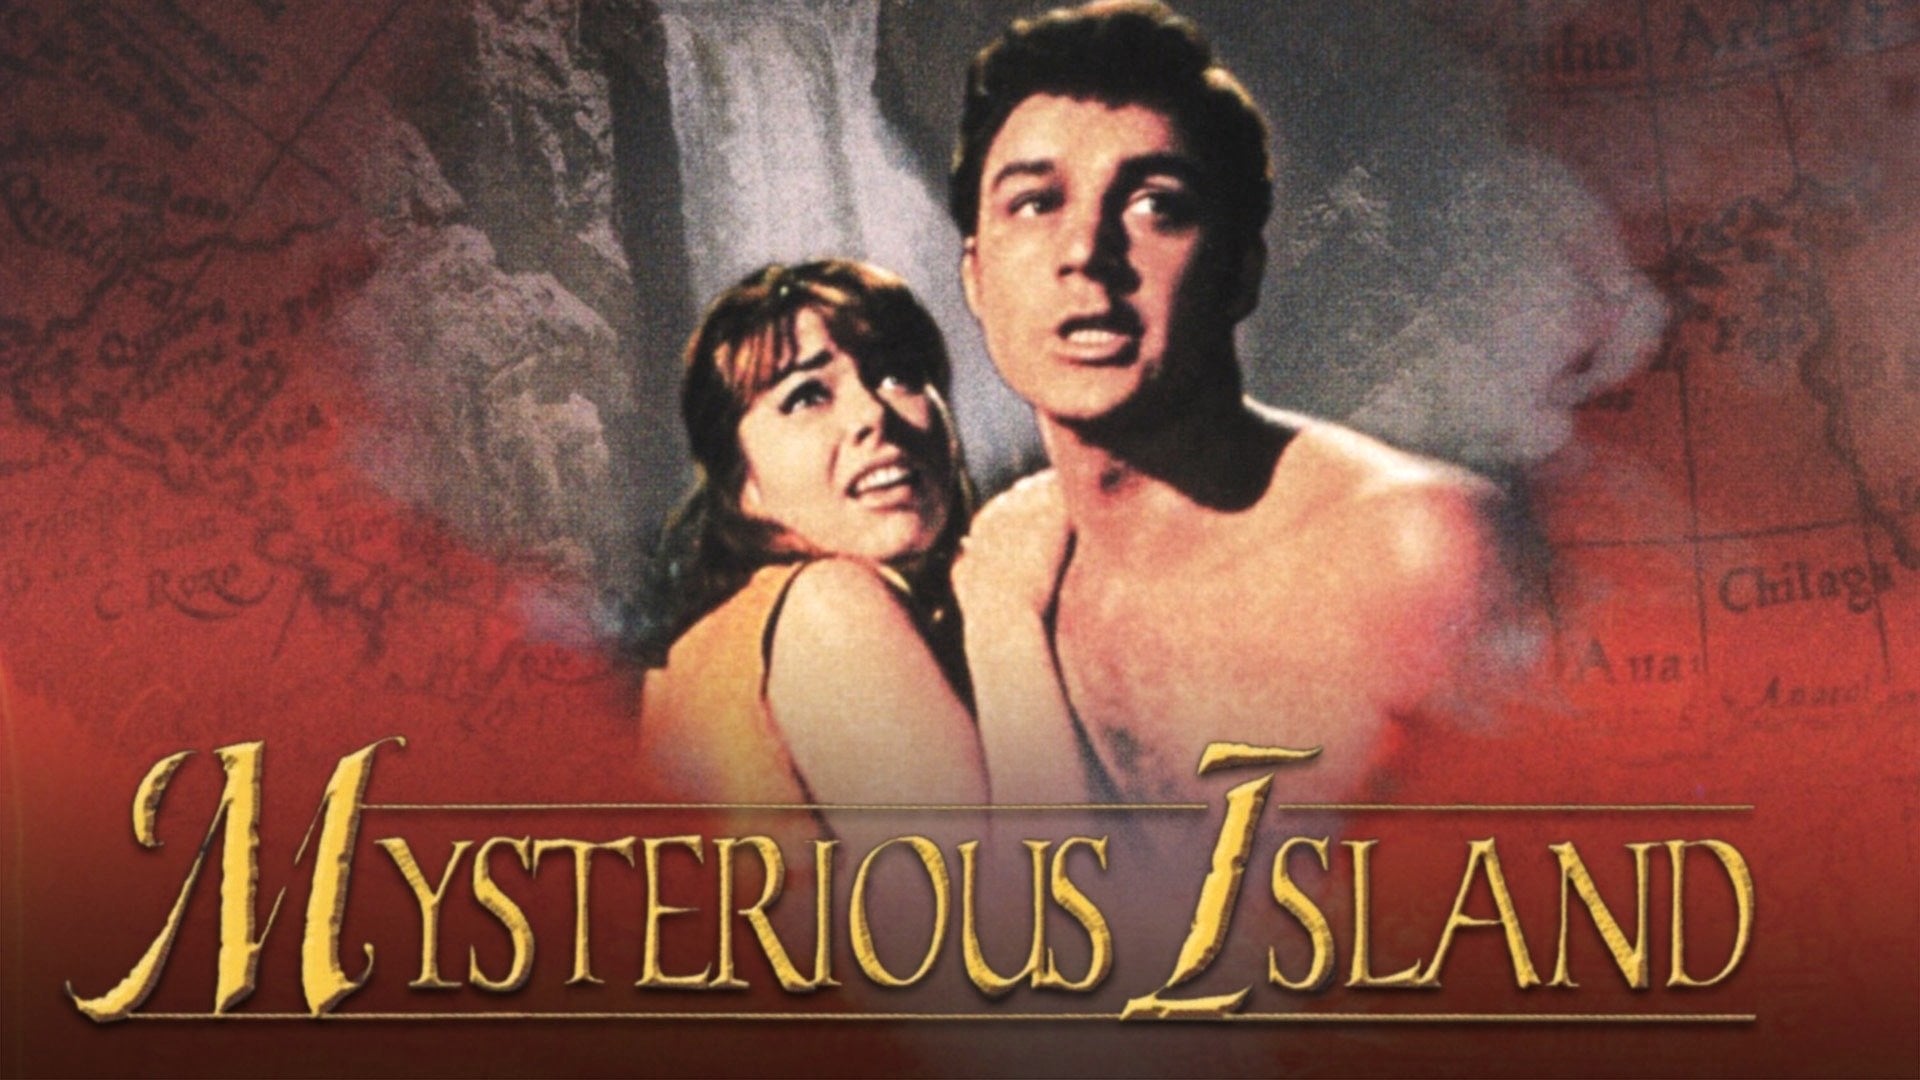 La isla misteriosa (1961)